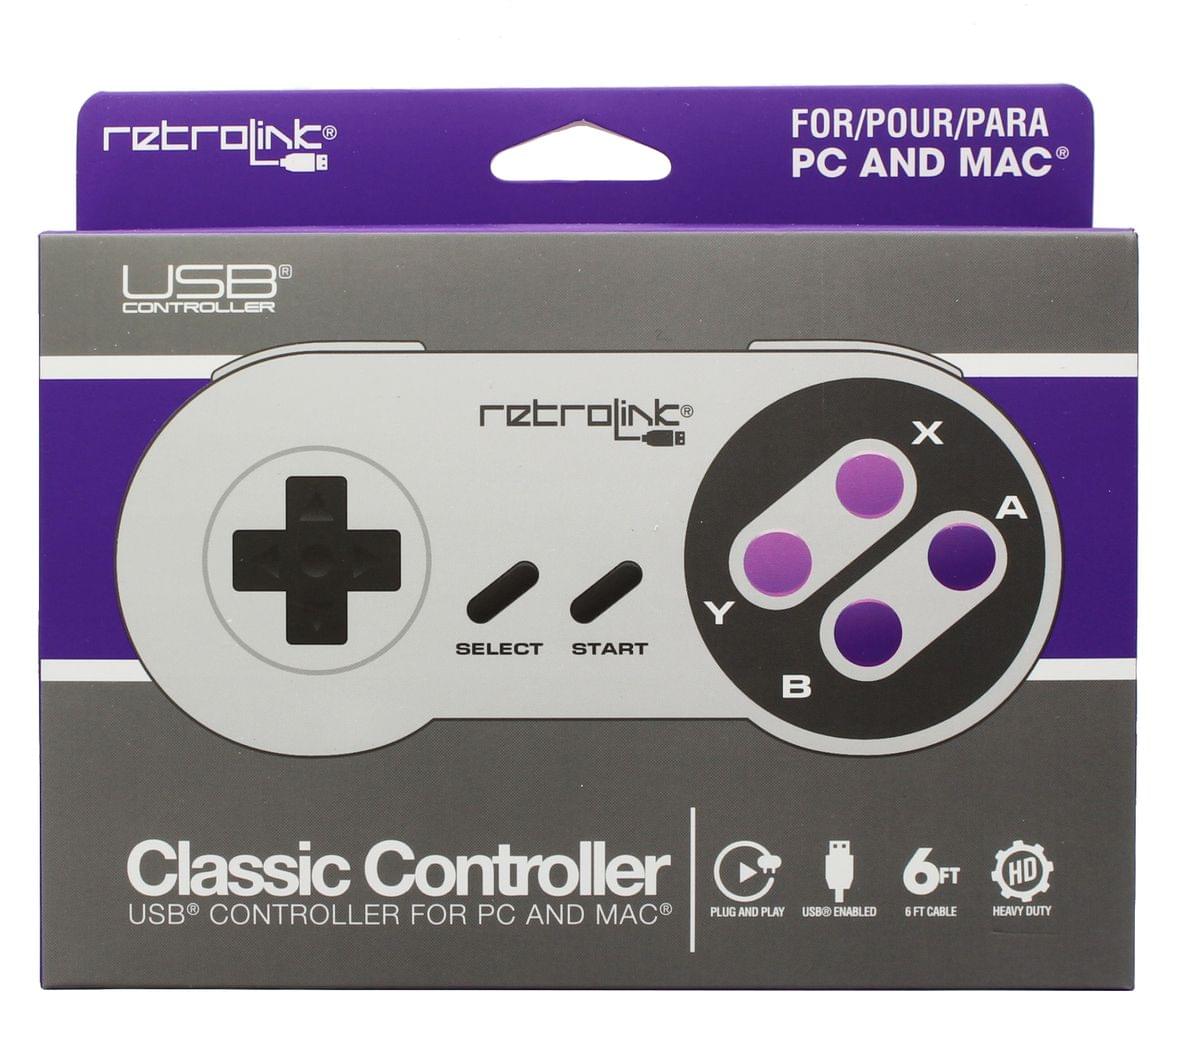 Retrolink USB Super Classic Controller